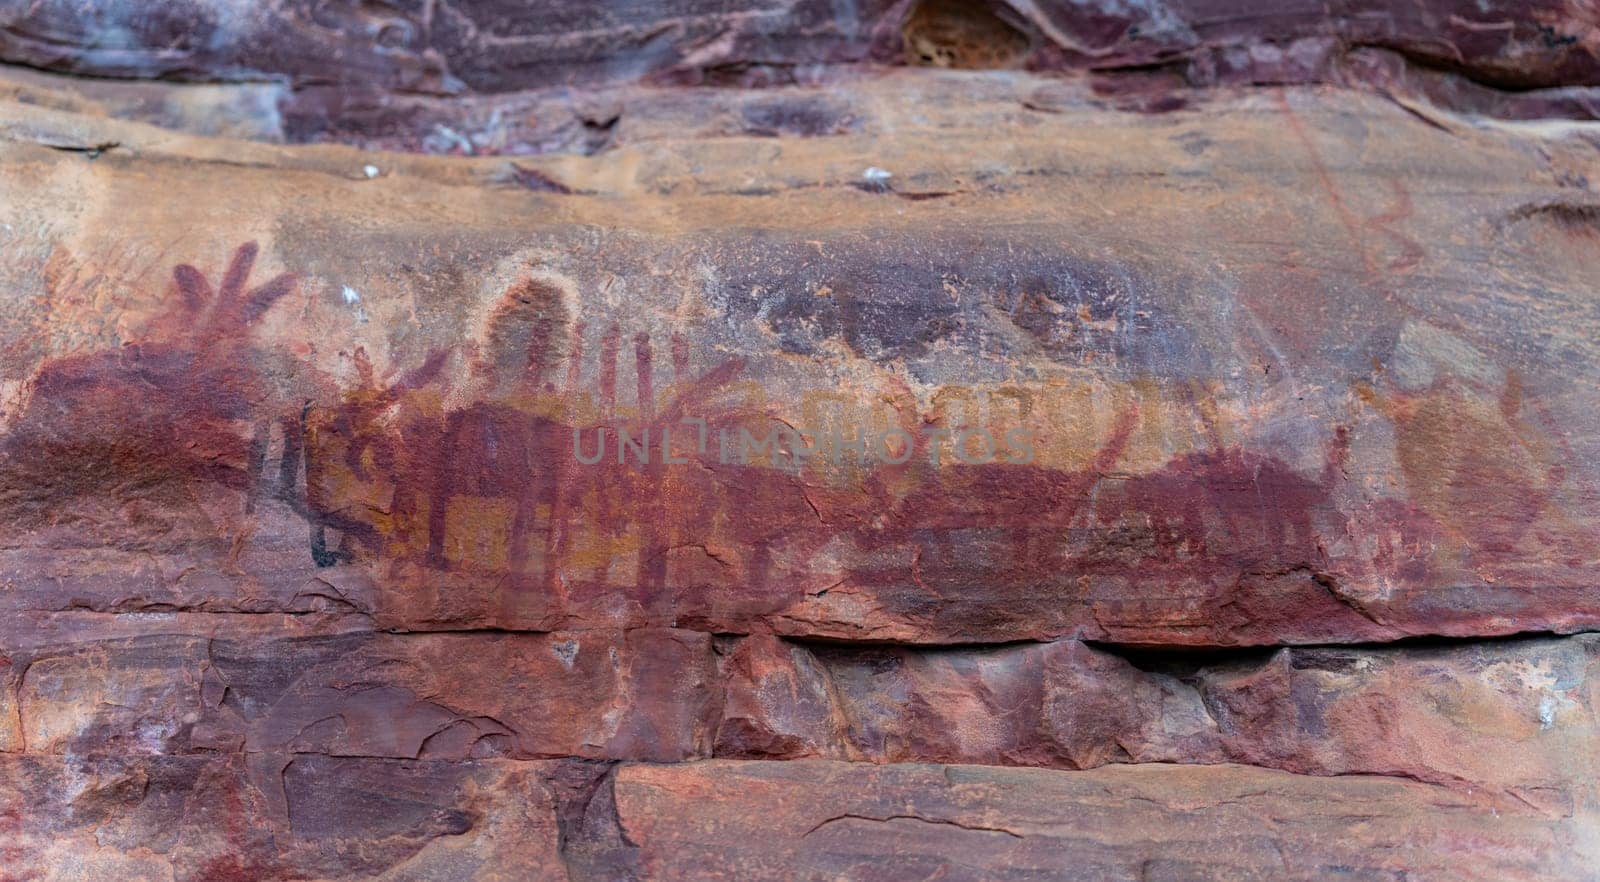 Ancient Rock Art Tells a Story of Human History by FerradalFCG